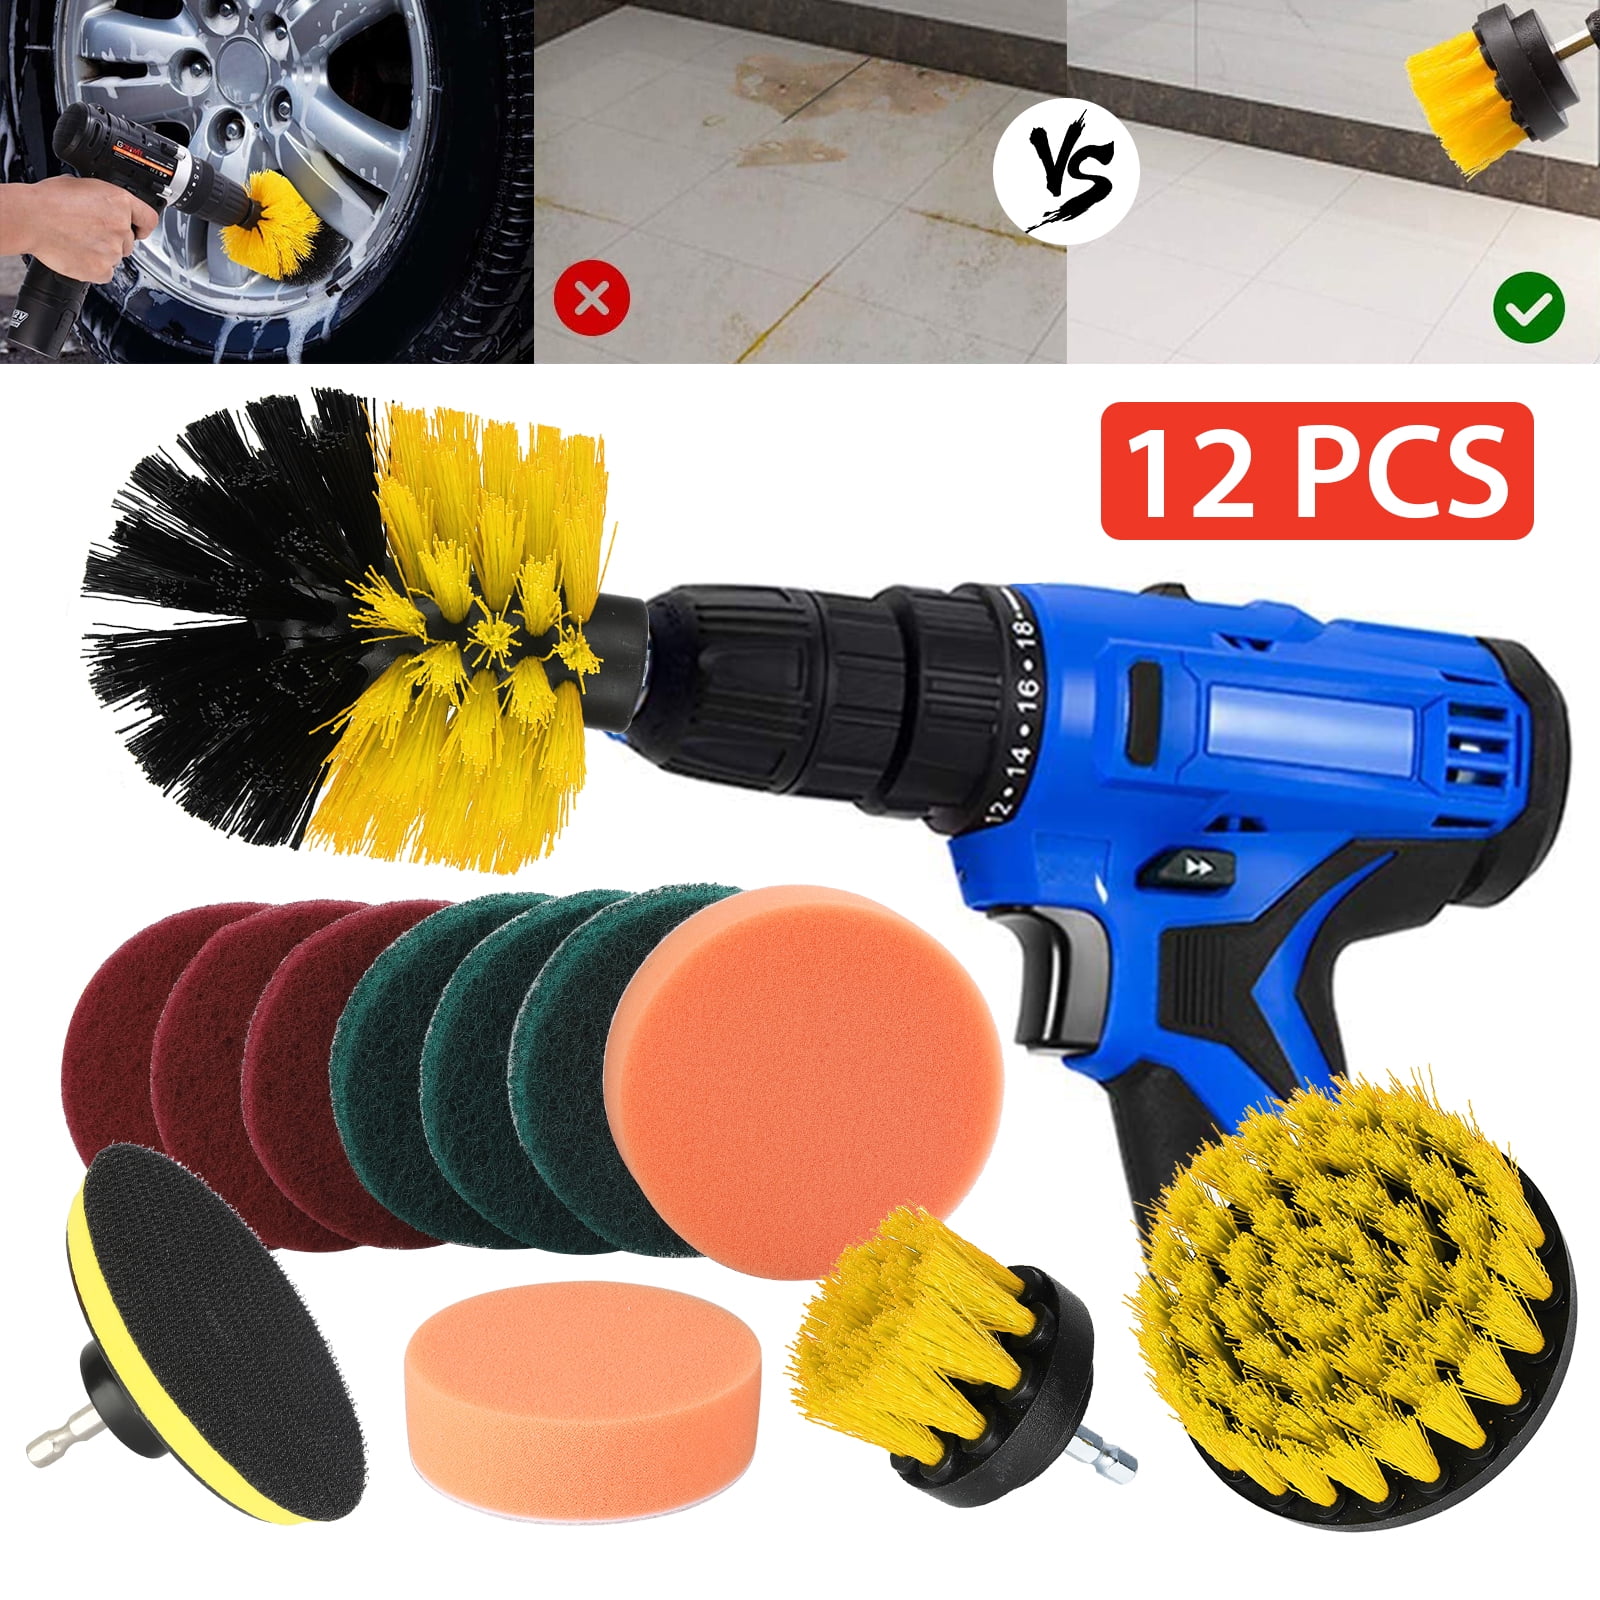 12Pcs Drill Brush Attachment Set, Power Scrubber Drill Brush Cleaning Kit, Scrubing Brush